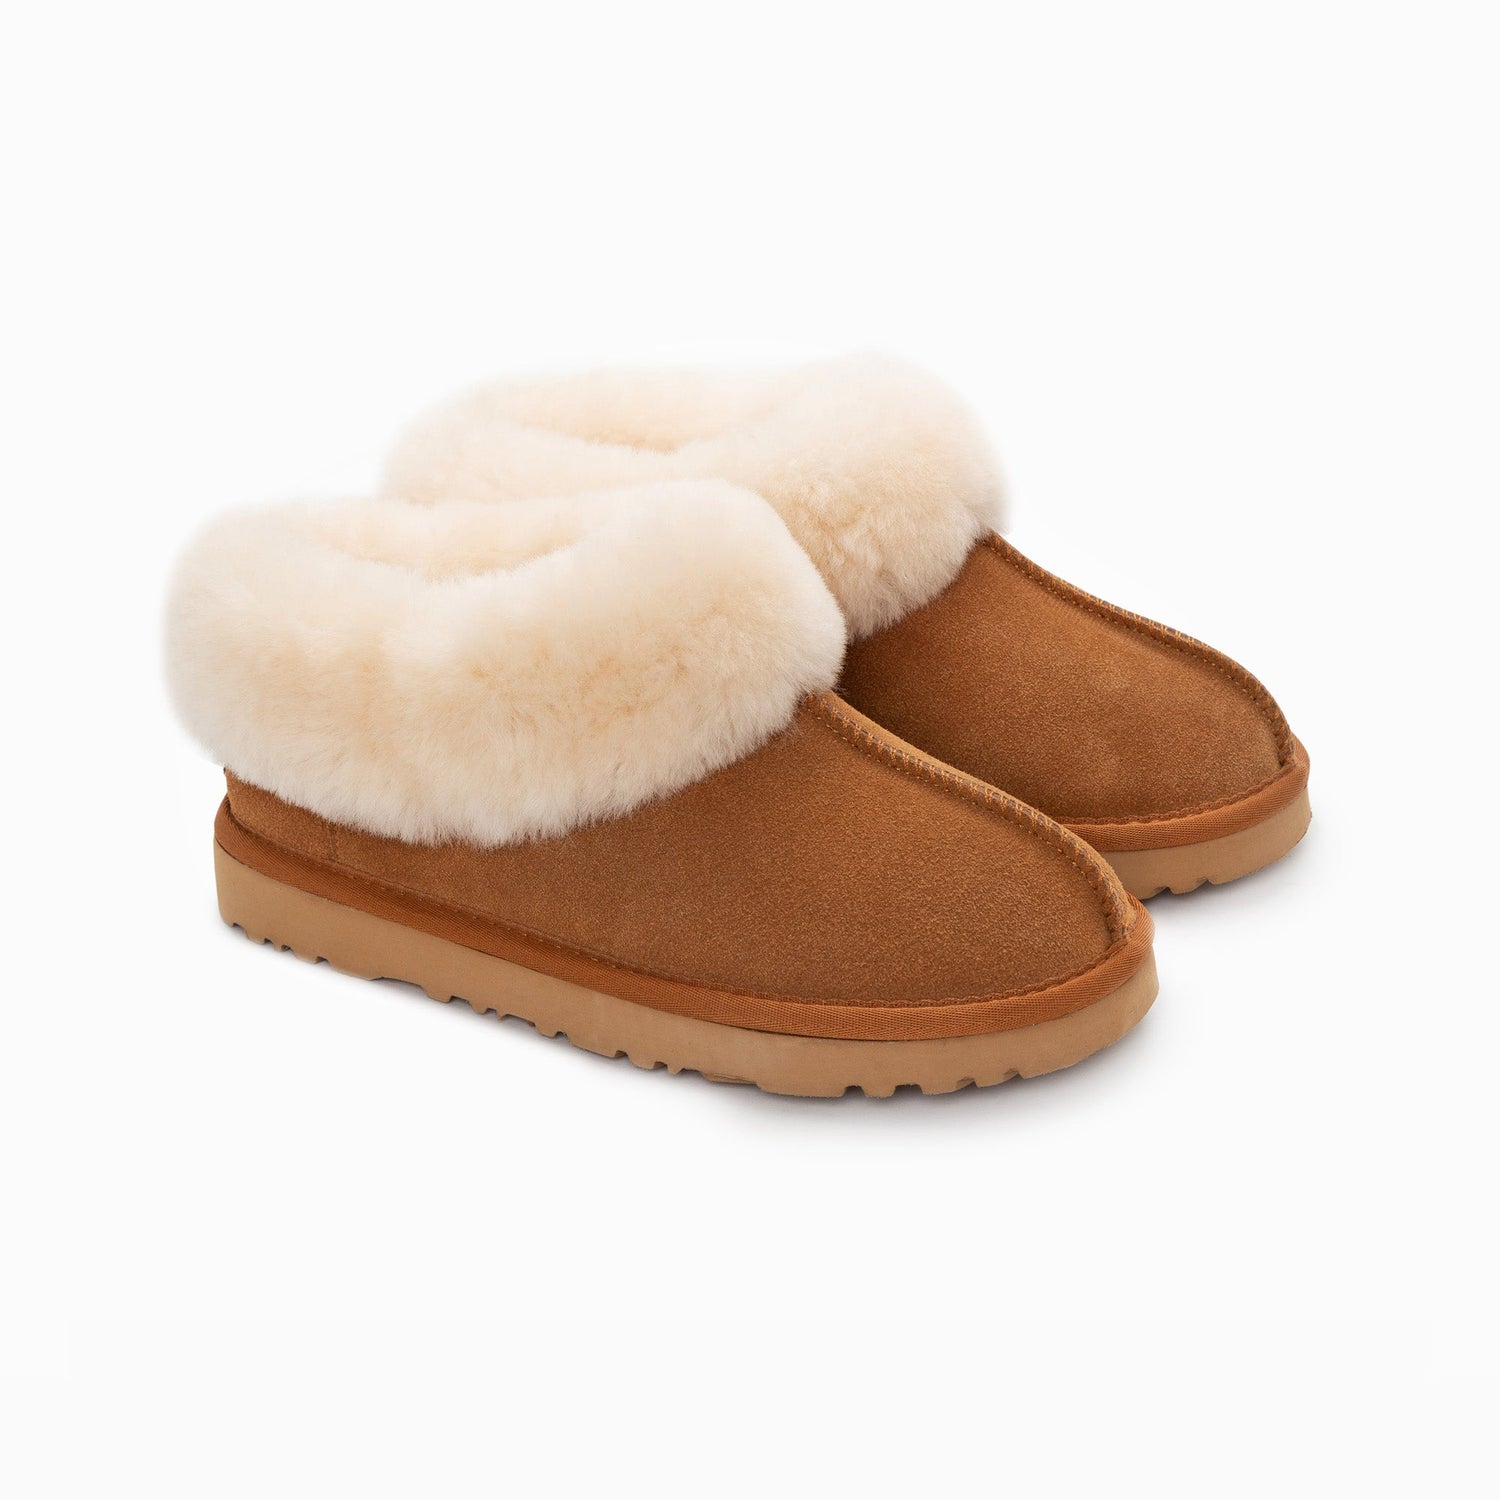 Ugg Slippers Collar Unisex Premium Sheepskin Slippers Suede-Slippers-PEROZ Accessories